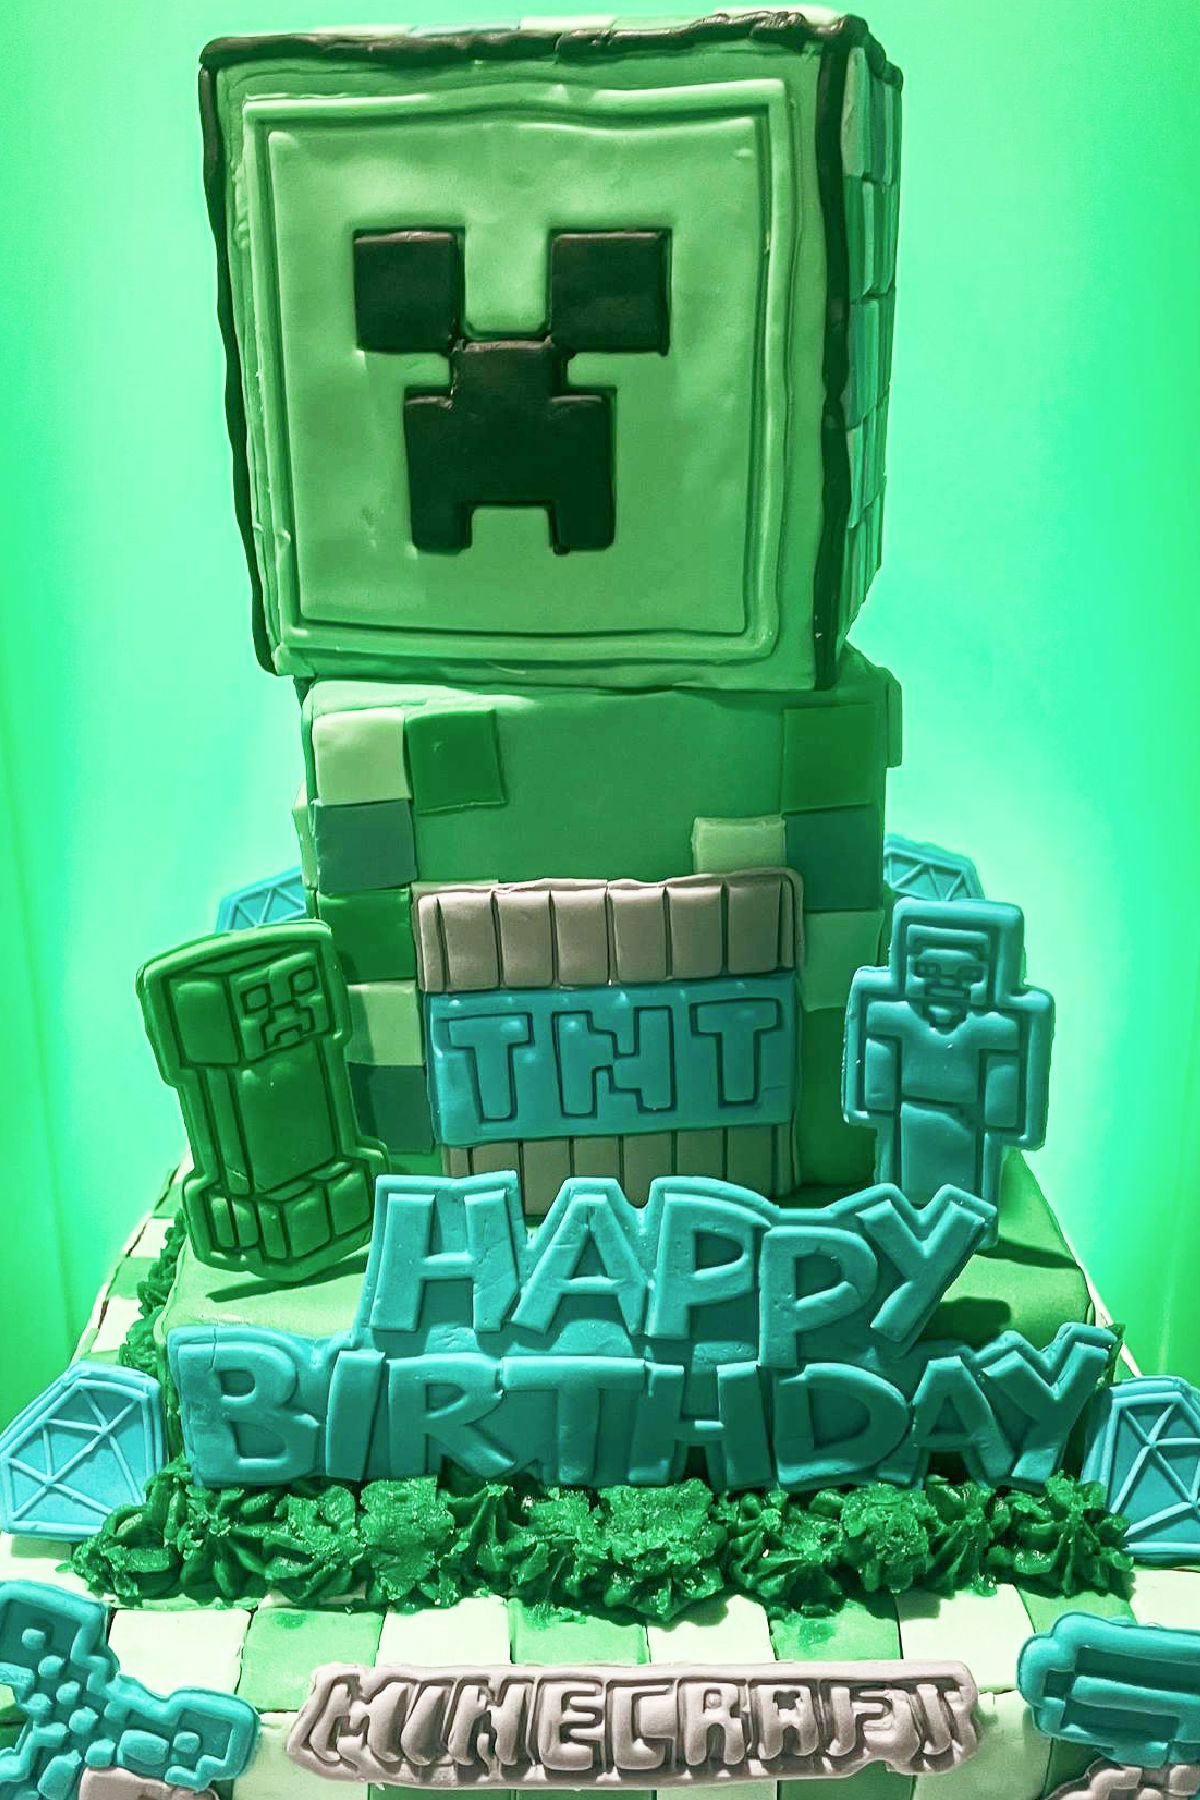 Creeper-Tiered Birthday Cake